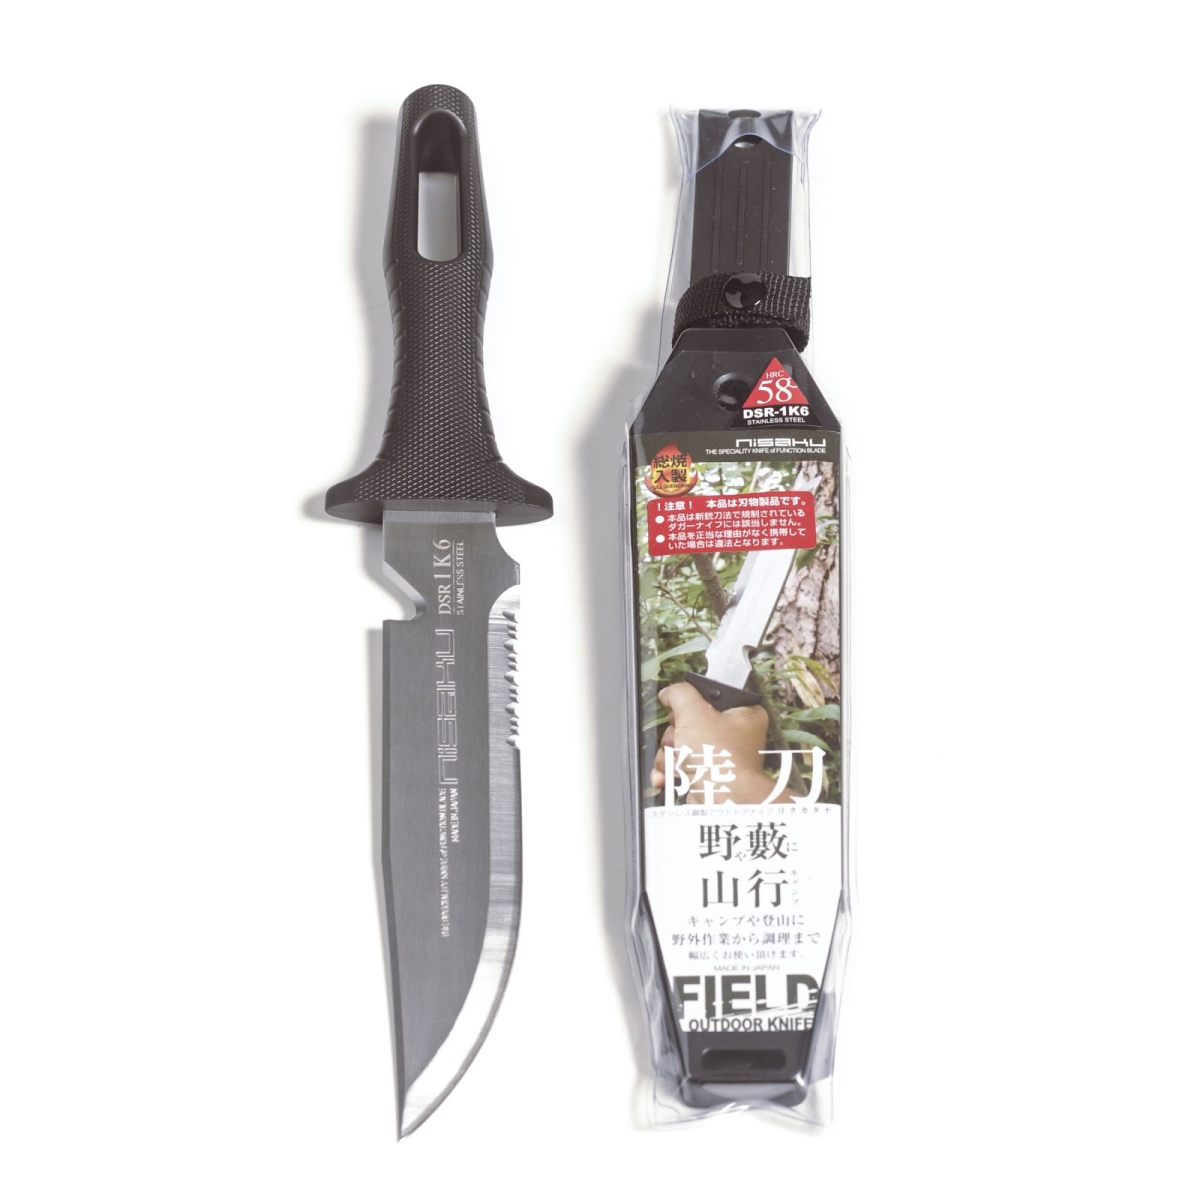 Njp811 7.5 In. Blade Rikugatana Stainless Steel Knife Limited Edition Dsr-1k6